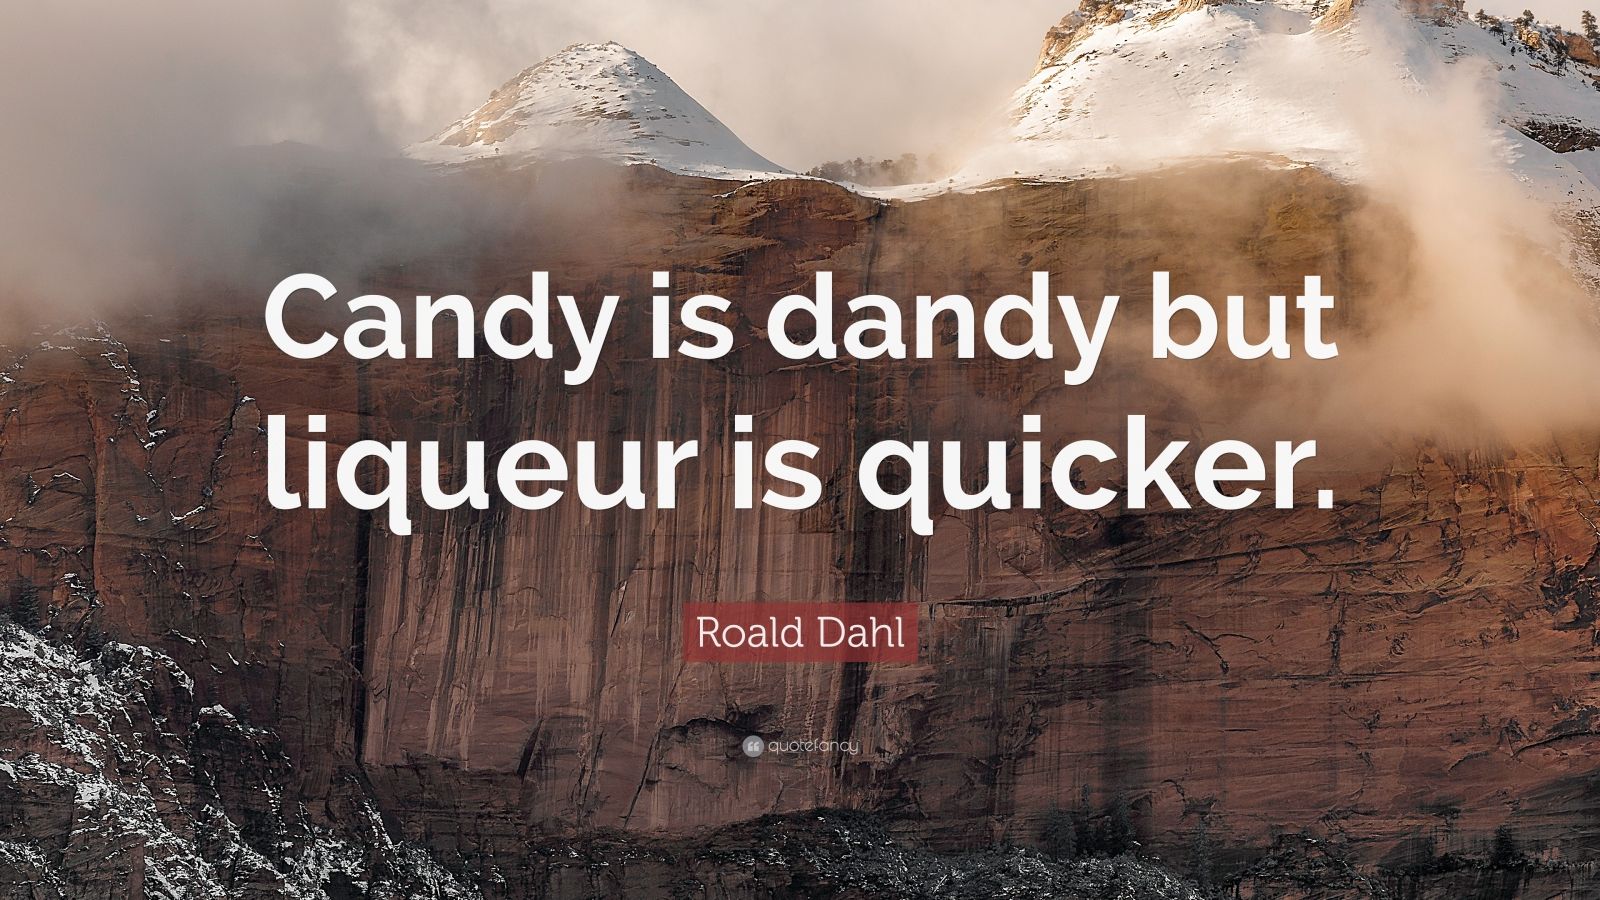 Roald Dahl Quote: “Candy is dandy but liqueur is quicker.” (10 ...